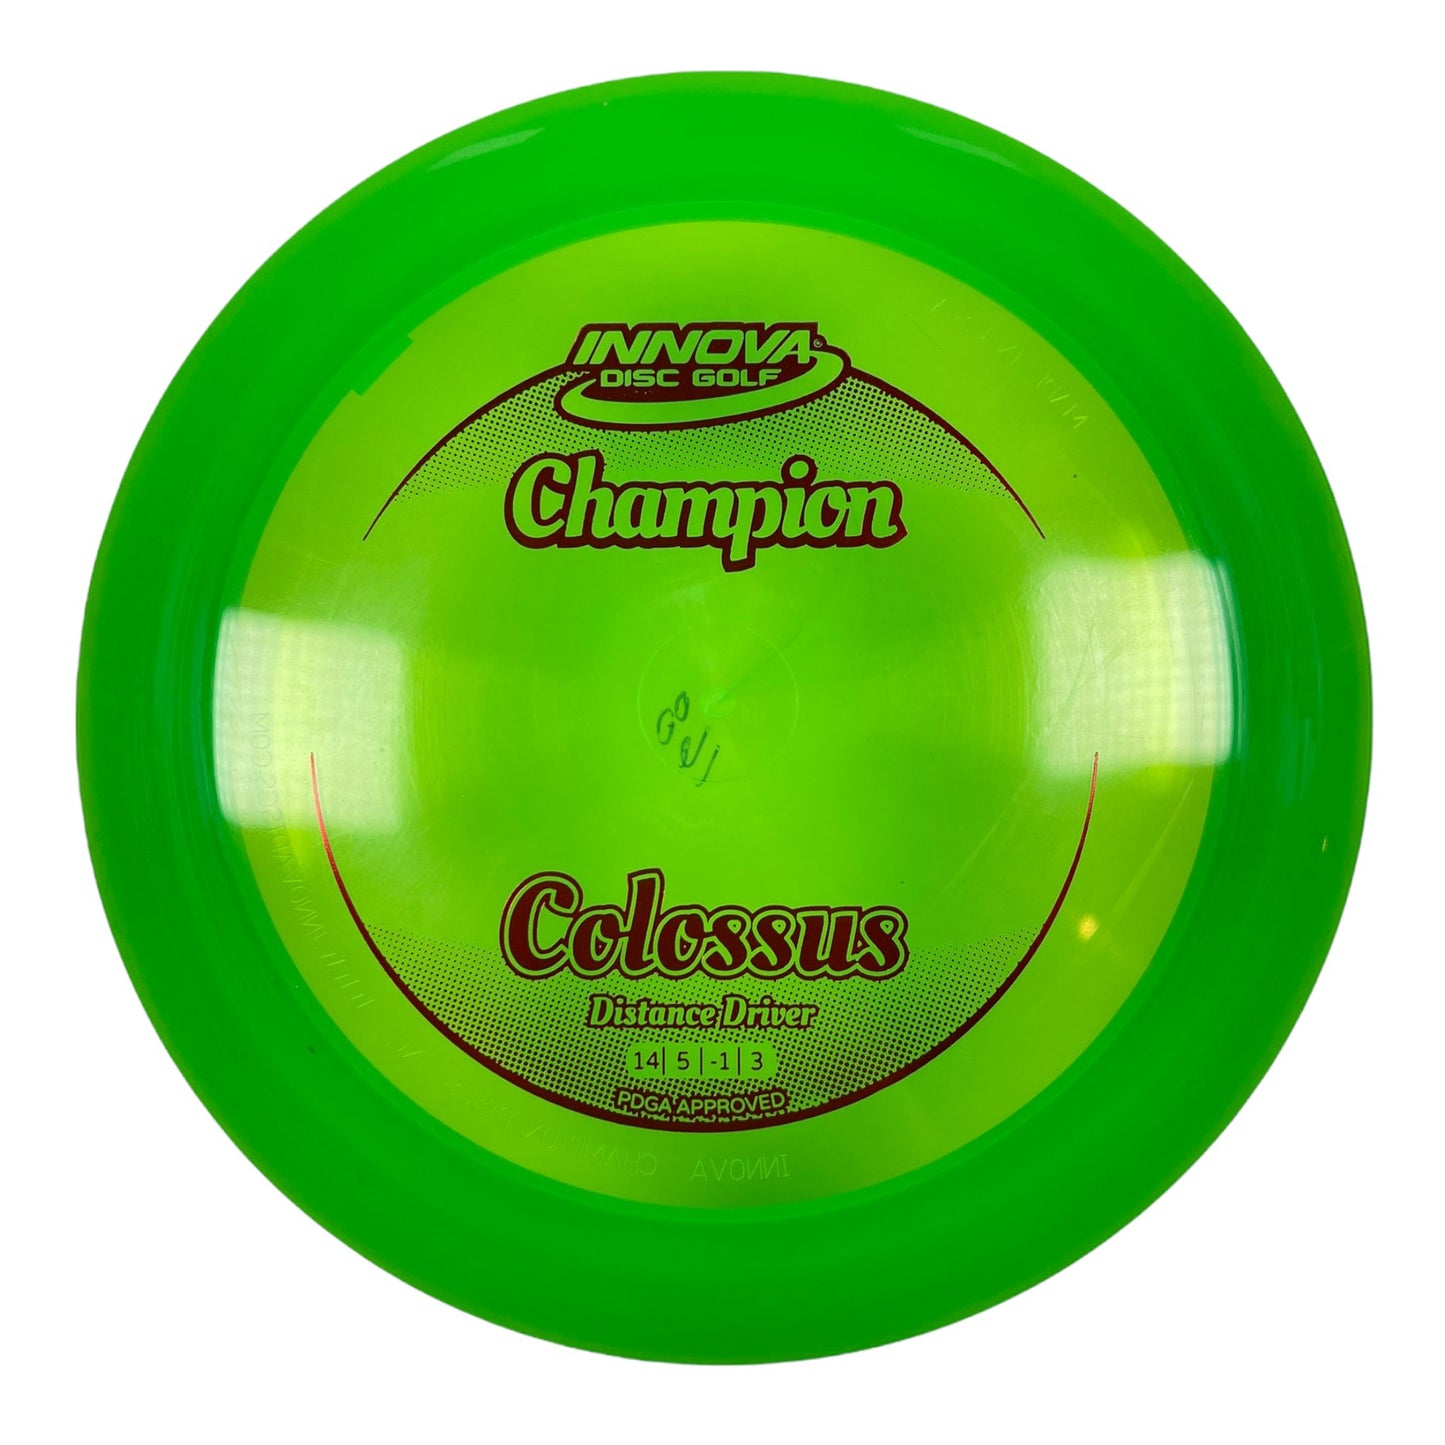 Innova Champion Discs Colossus | Champion | Green/Red 168g Disc Golf